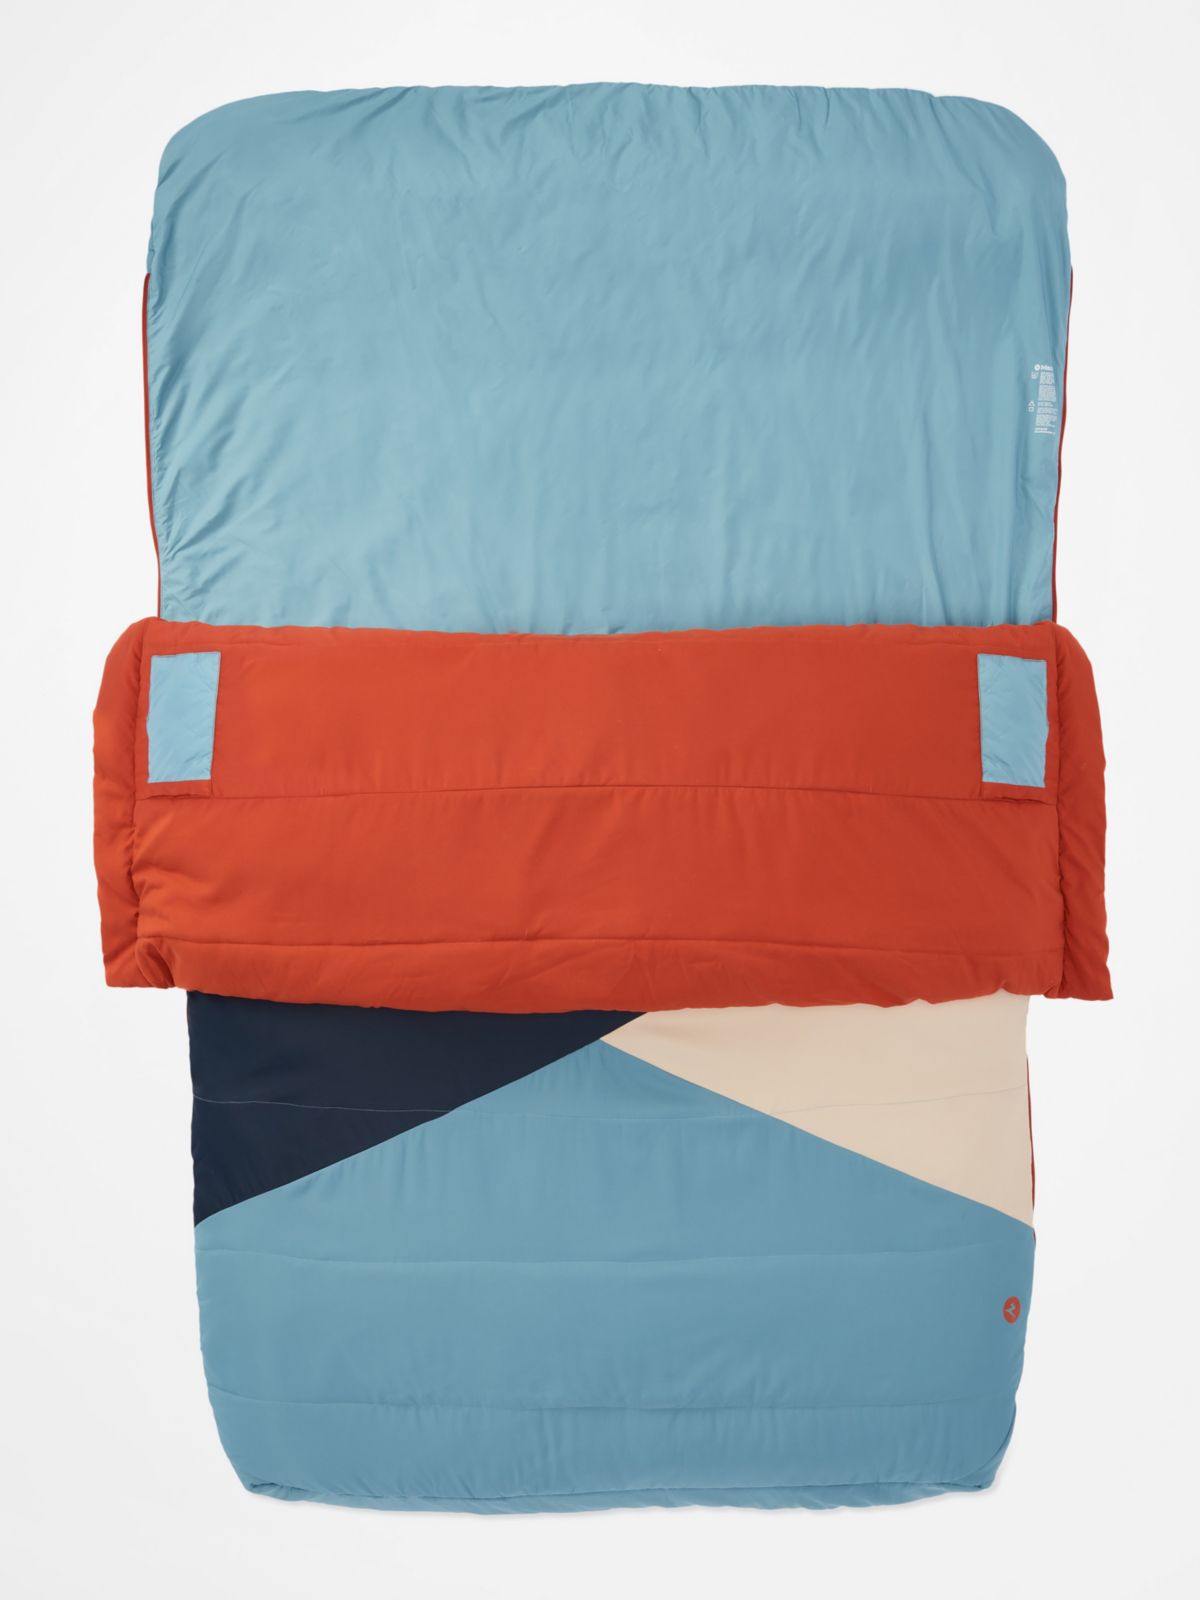 Idlewild 30° Doublewide Sleeping Bag